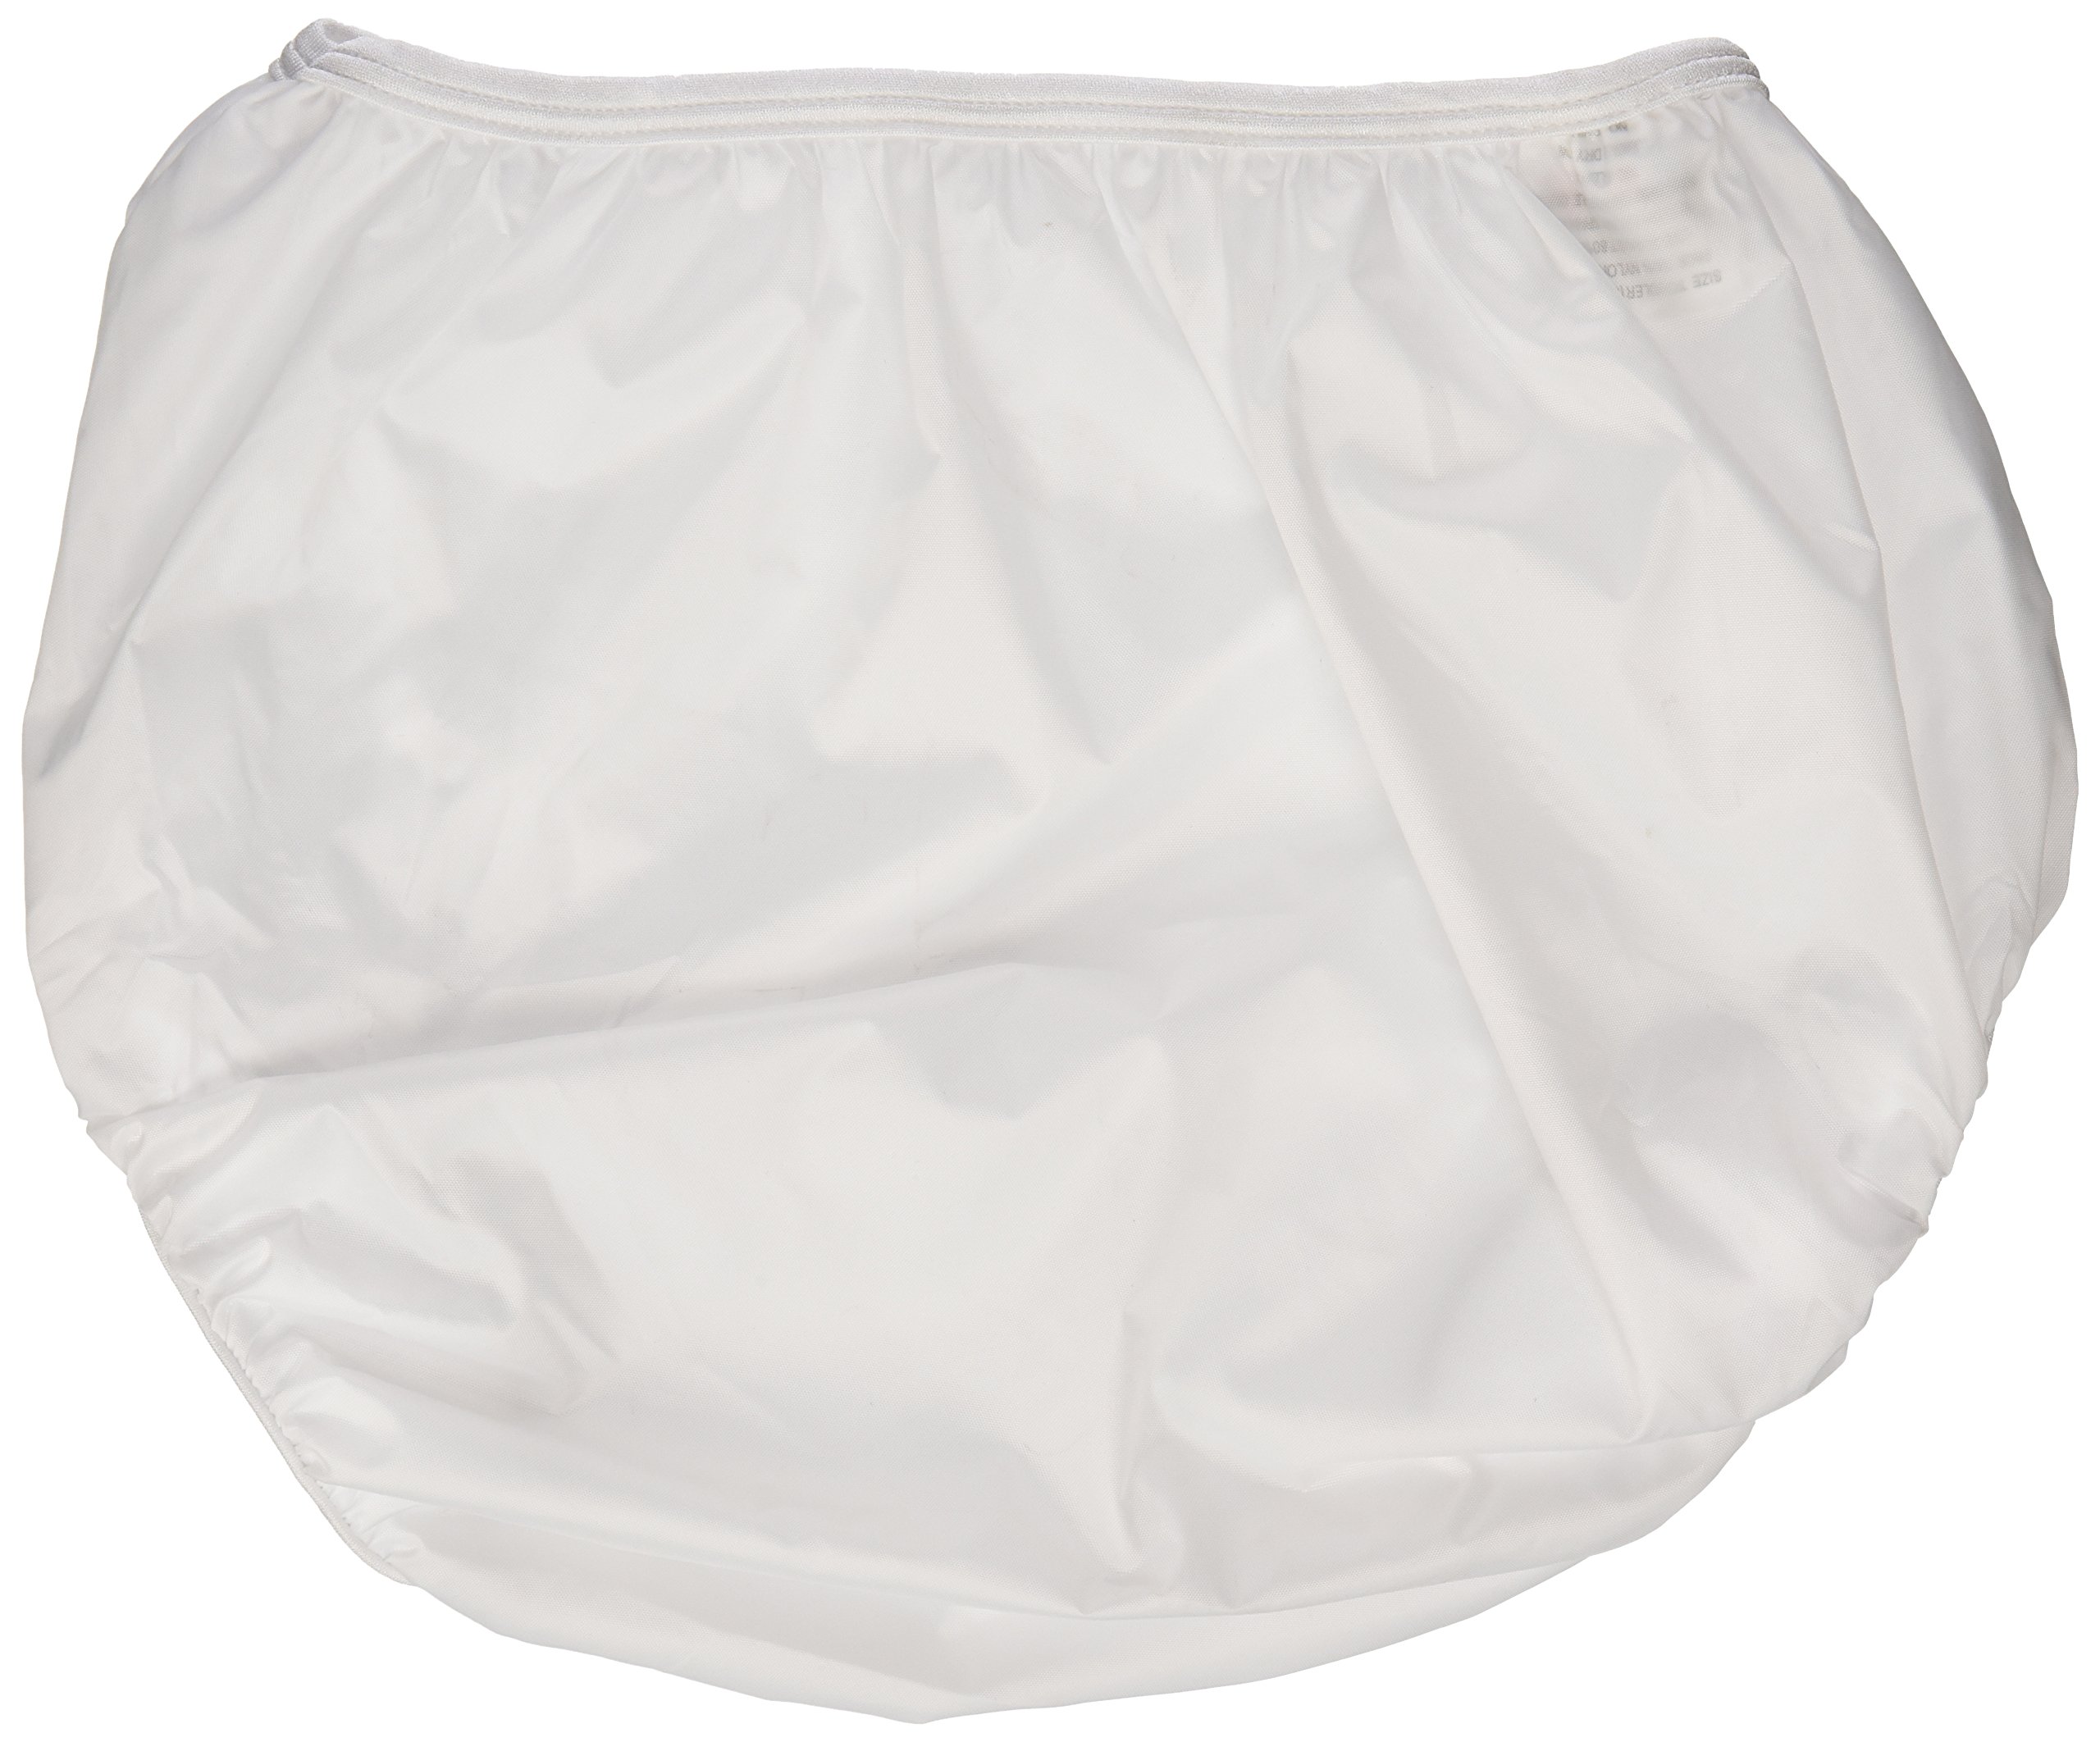 Dappi Waterproof 100% Nylon Diaper Pants, White, X-Large (2 Count)